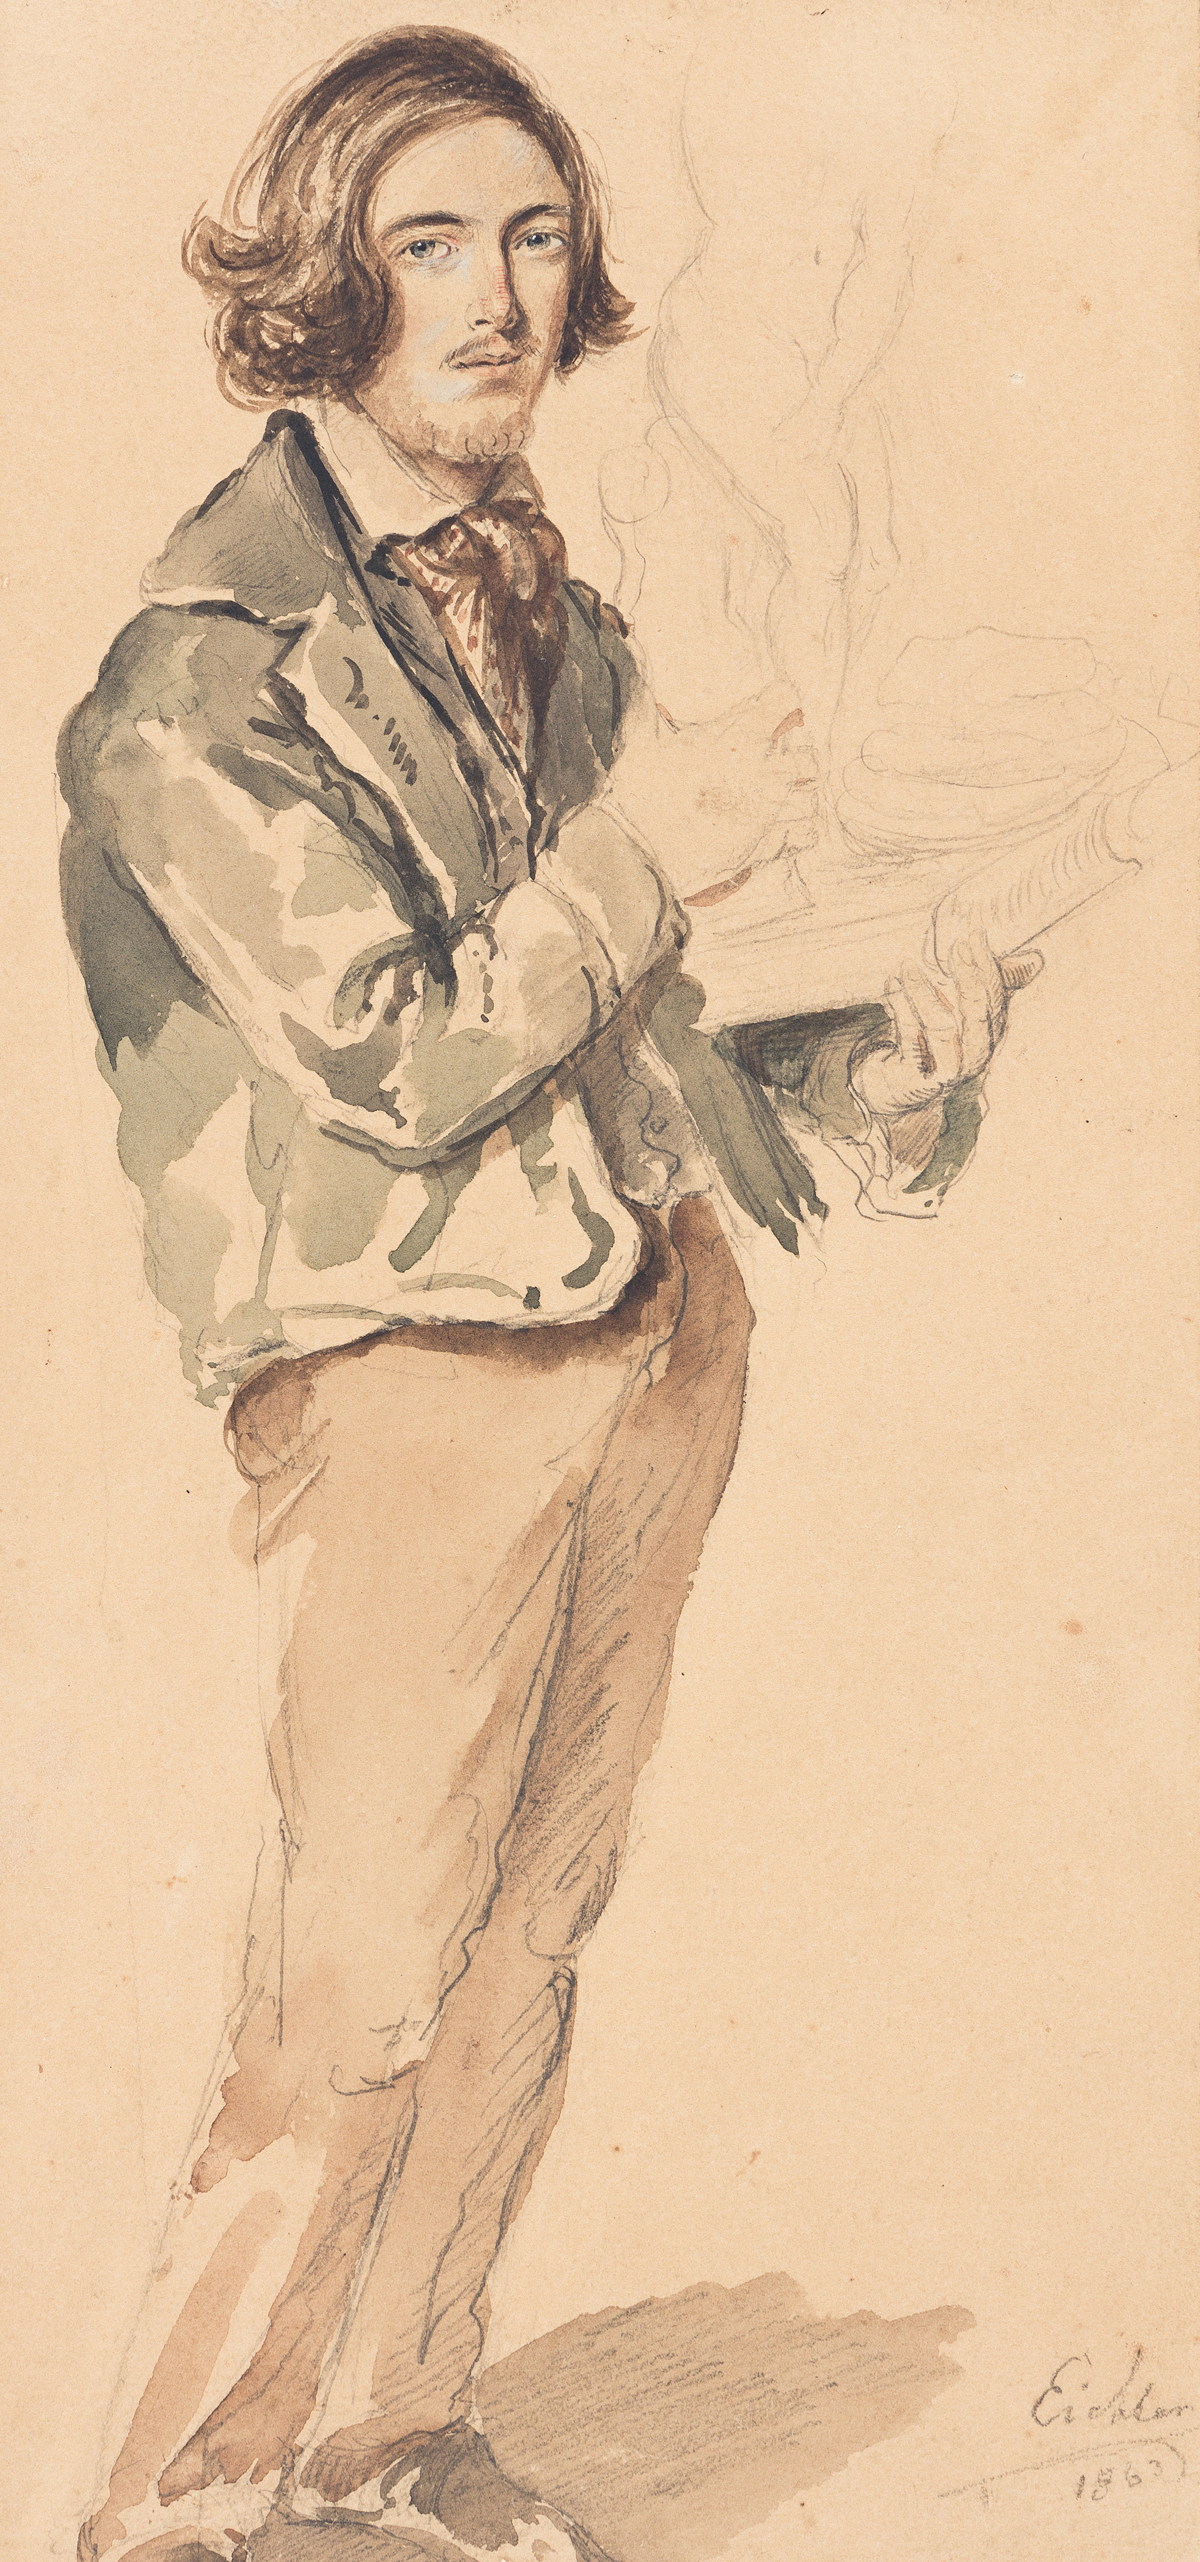 HERMANN EICHLER Full-Length Portrait of an Artist Holding a Sculpture.